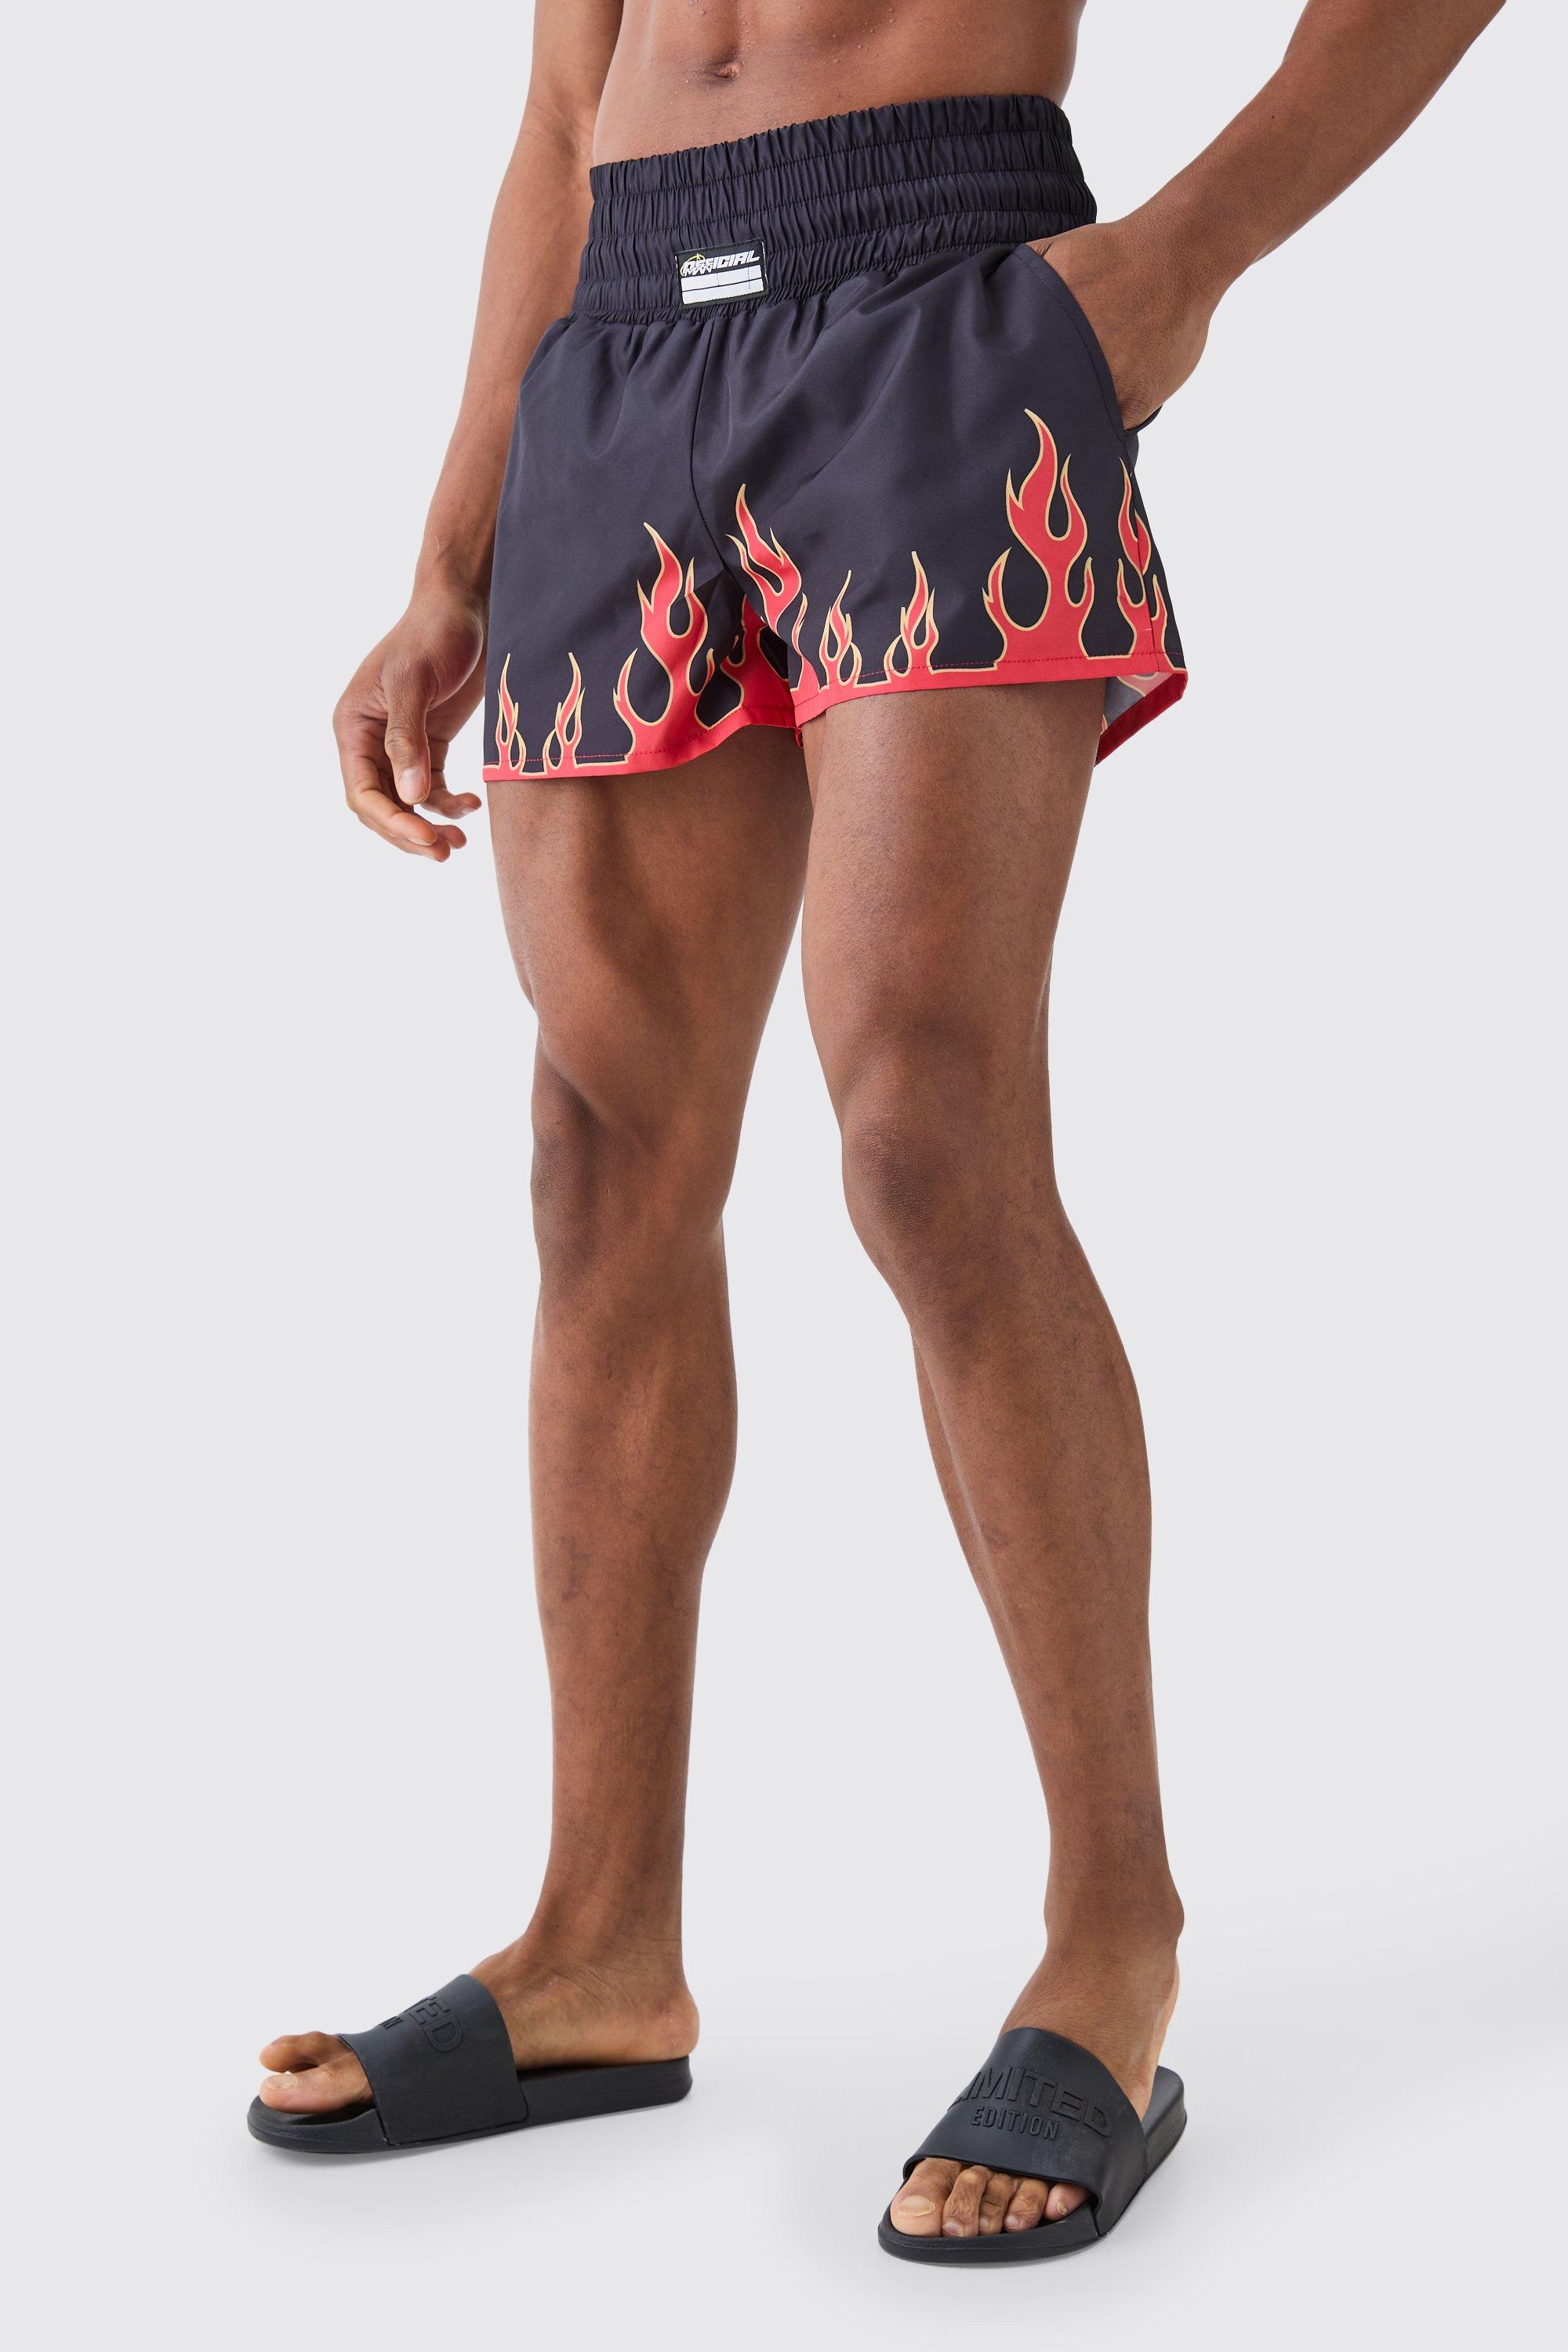 Mens Black Fighter Style Flame Printed Swim Shorts, Black